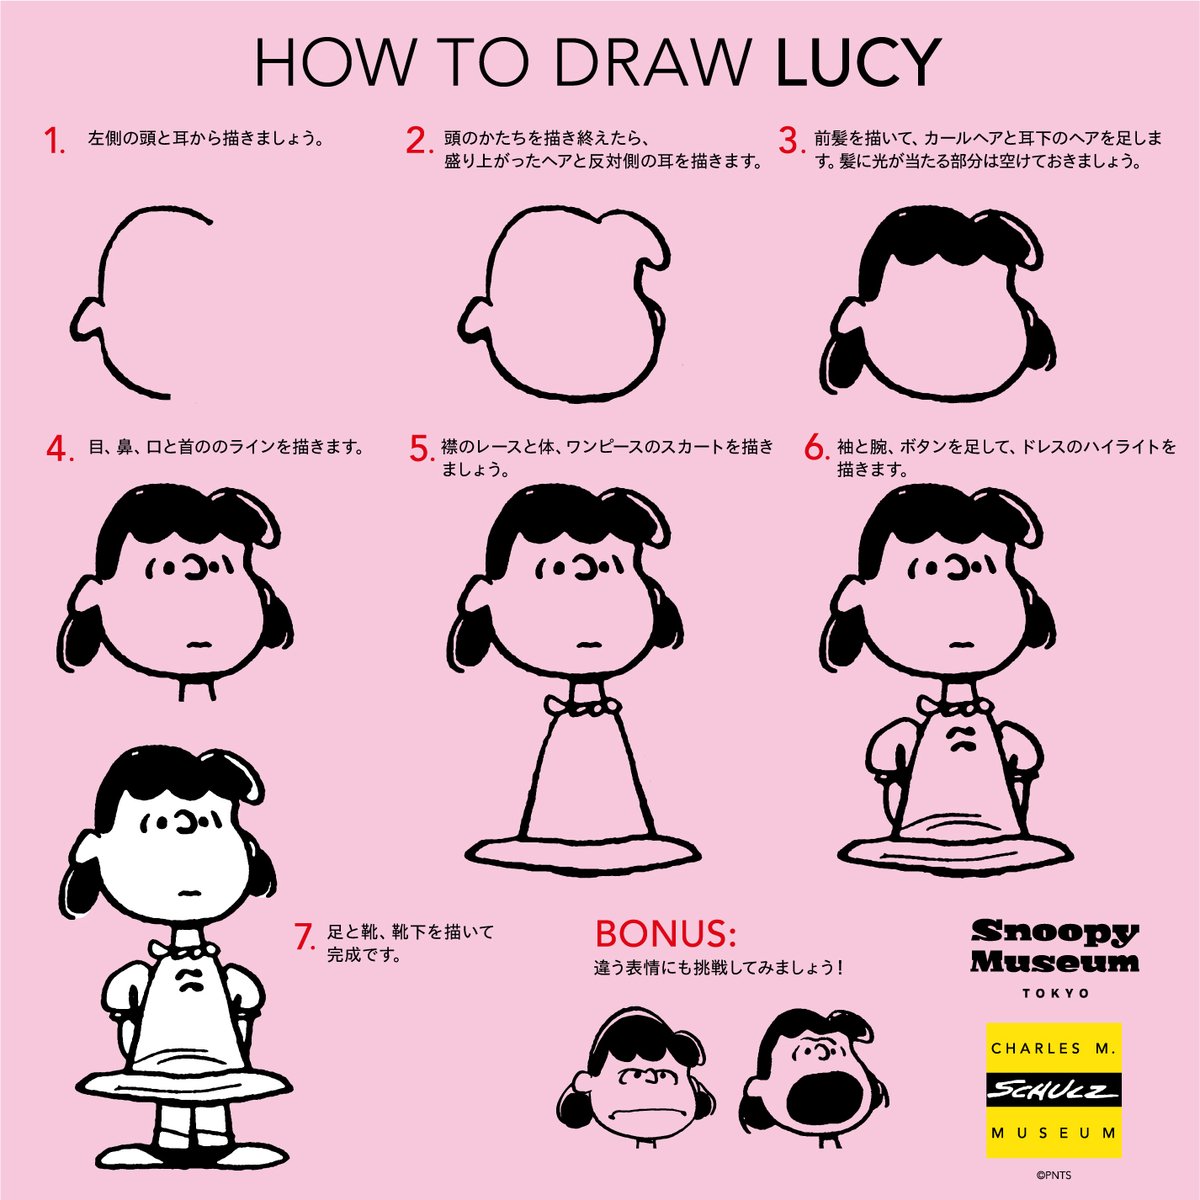 Snoopy Museum Tokyo Twitterren ピーナッツ ギャングを描こう ガミガミ屋さんの女の子 ルーシーの描き方をご紹介します あなたが描いた絵に ピーナッツギャングを描こう をつけてシェアしてくださいね Schulzmuseum Drawlucy Snoopymuseumtokyo